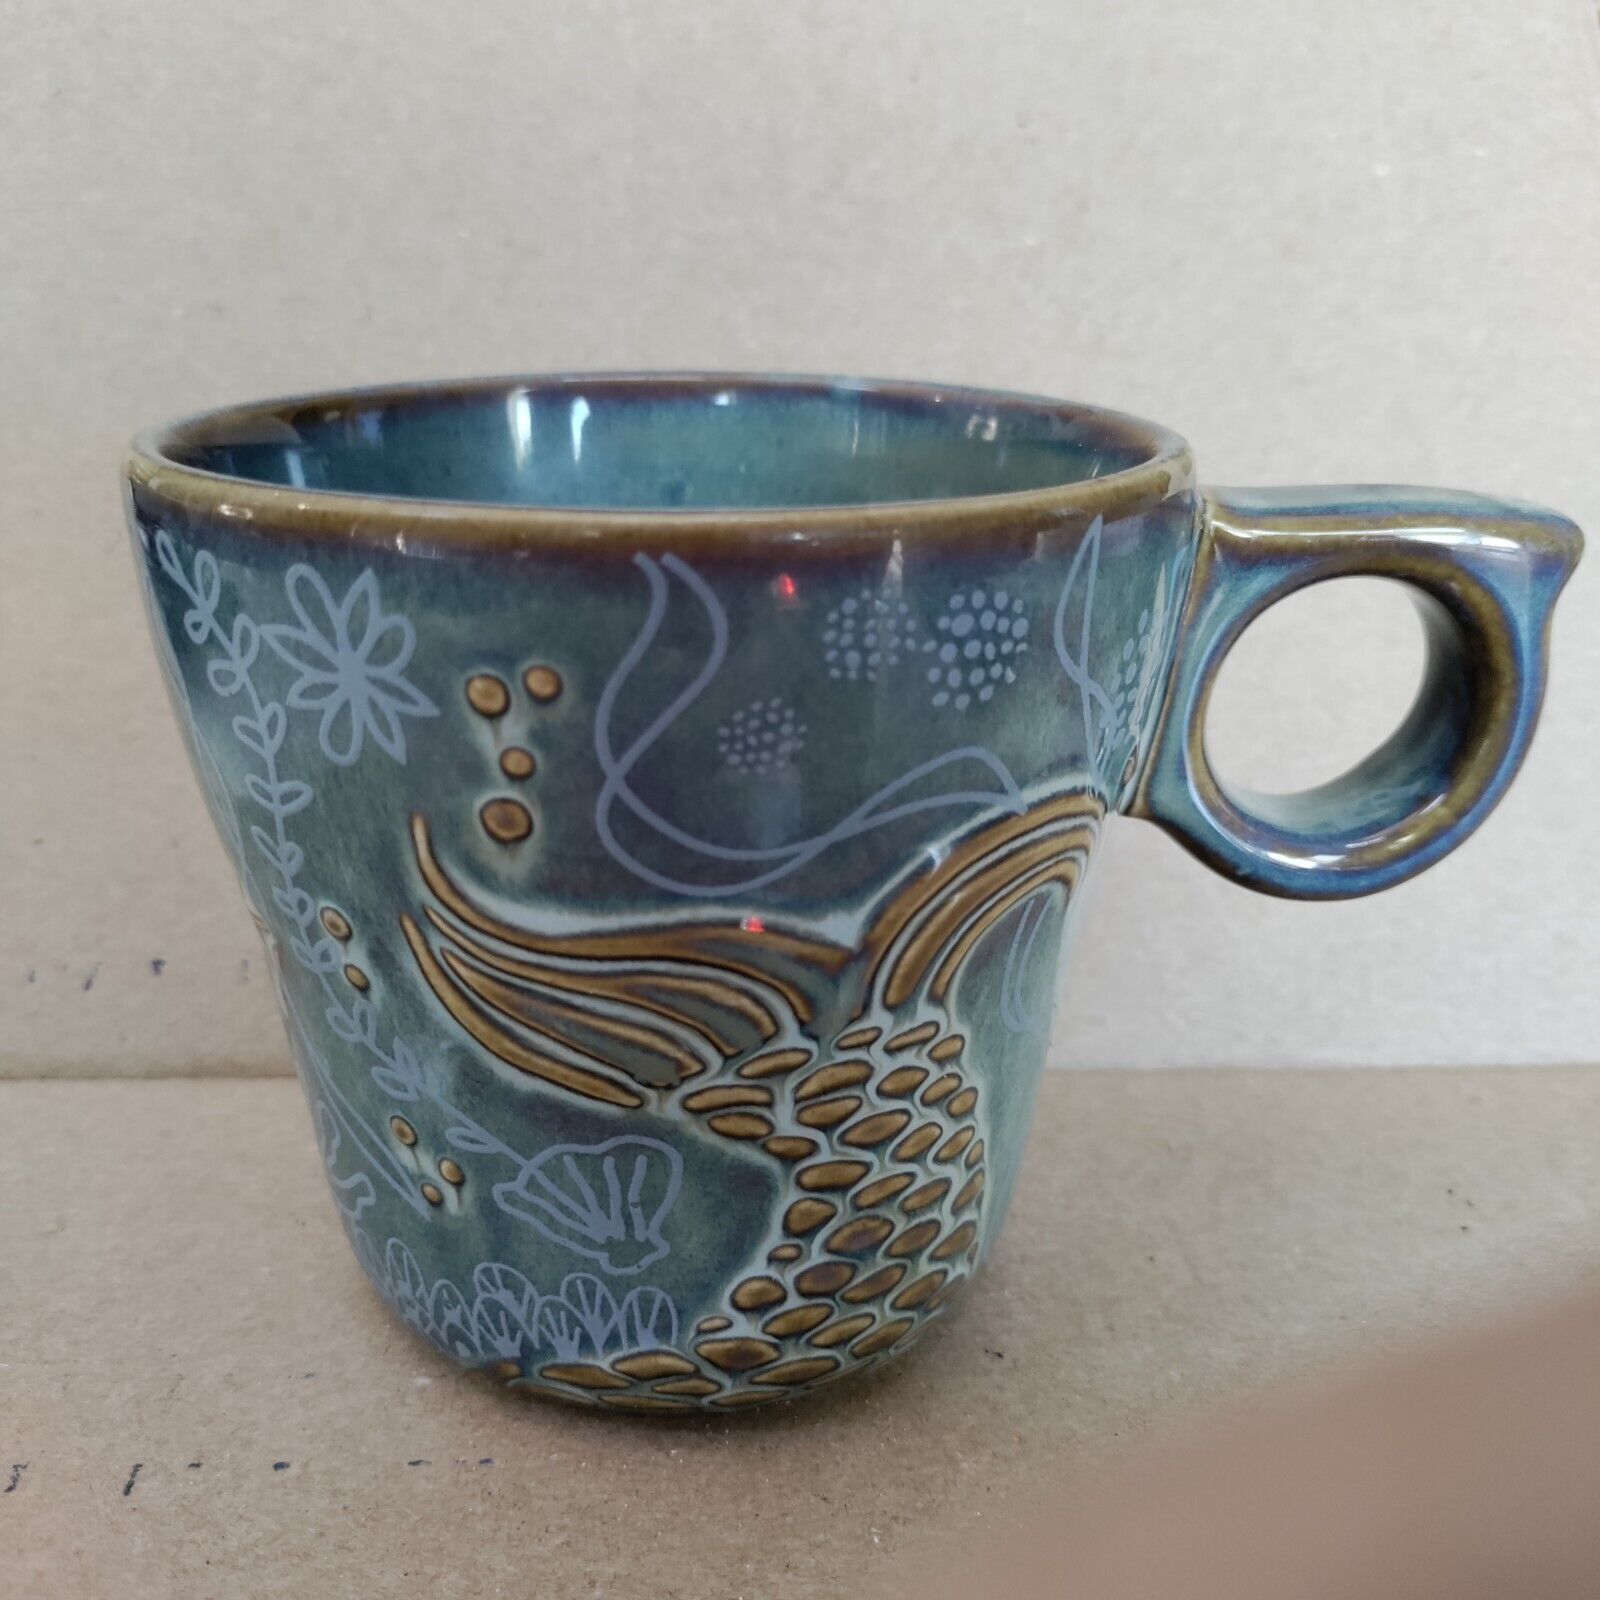 Starbucks Mug Mermaid Tail 2014 Anniversary Collection Coffee Mug